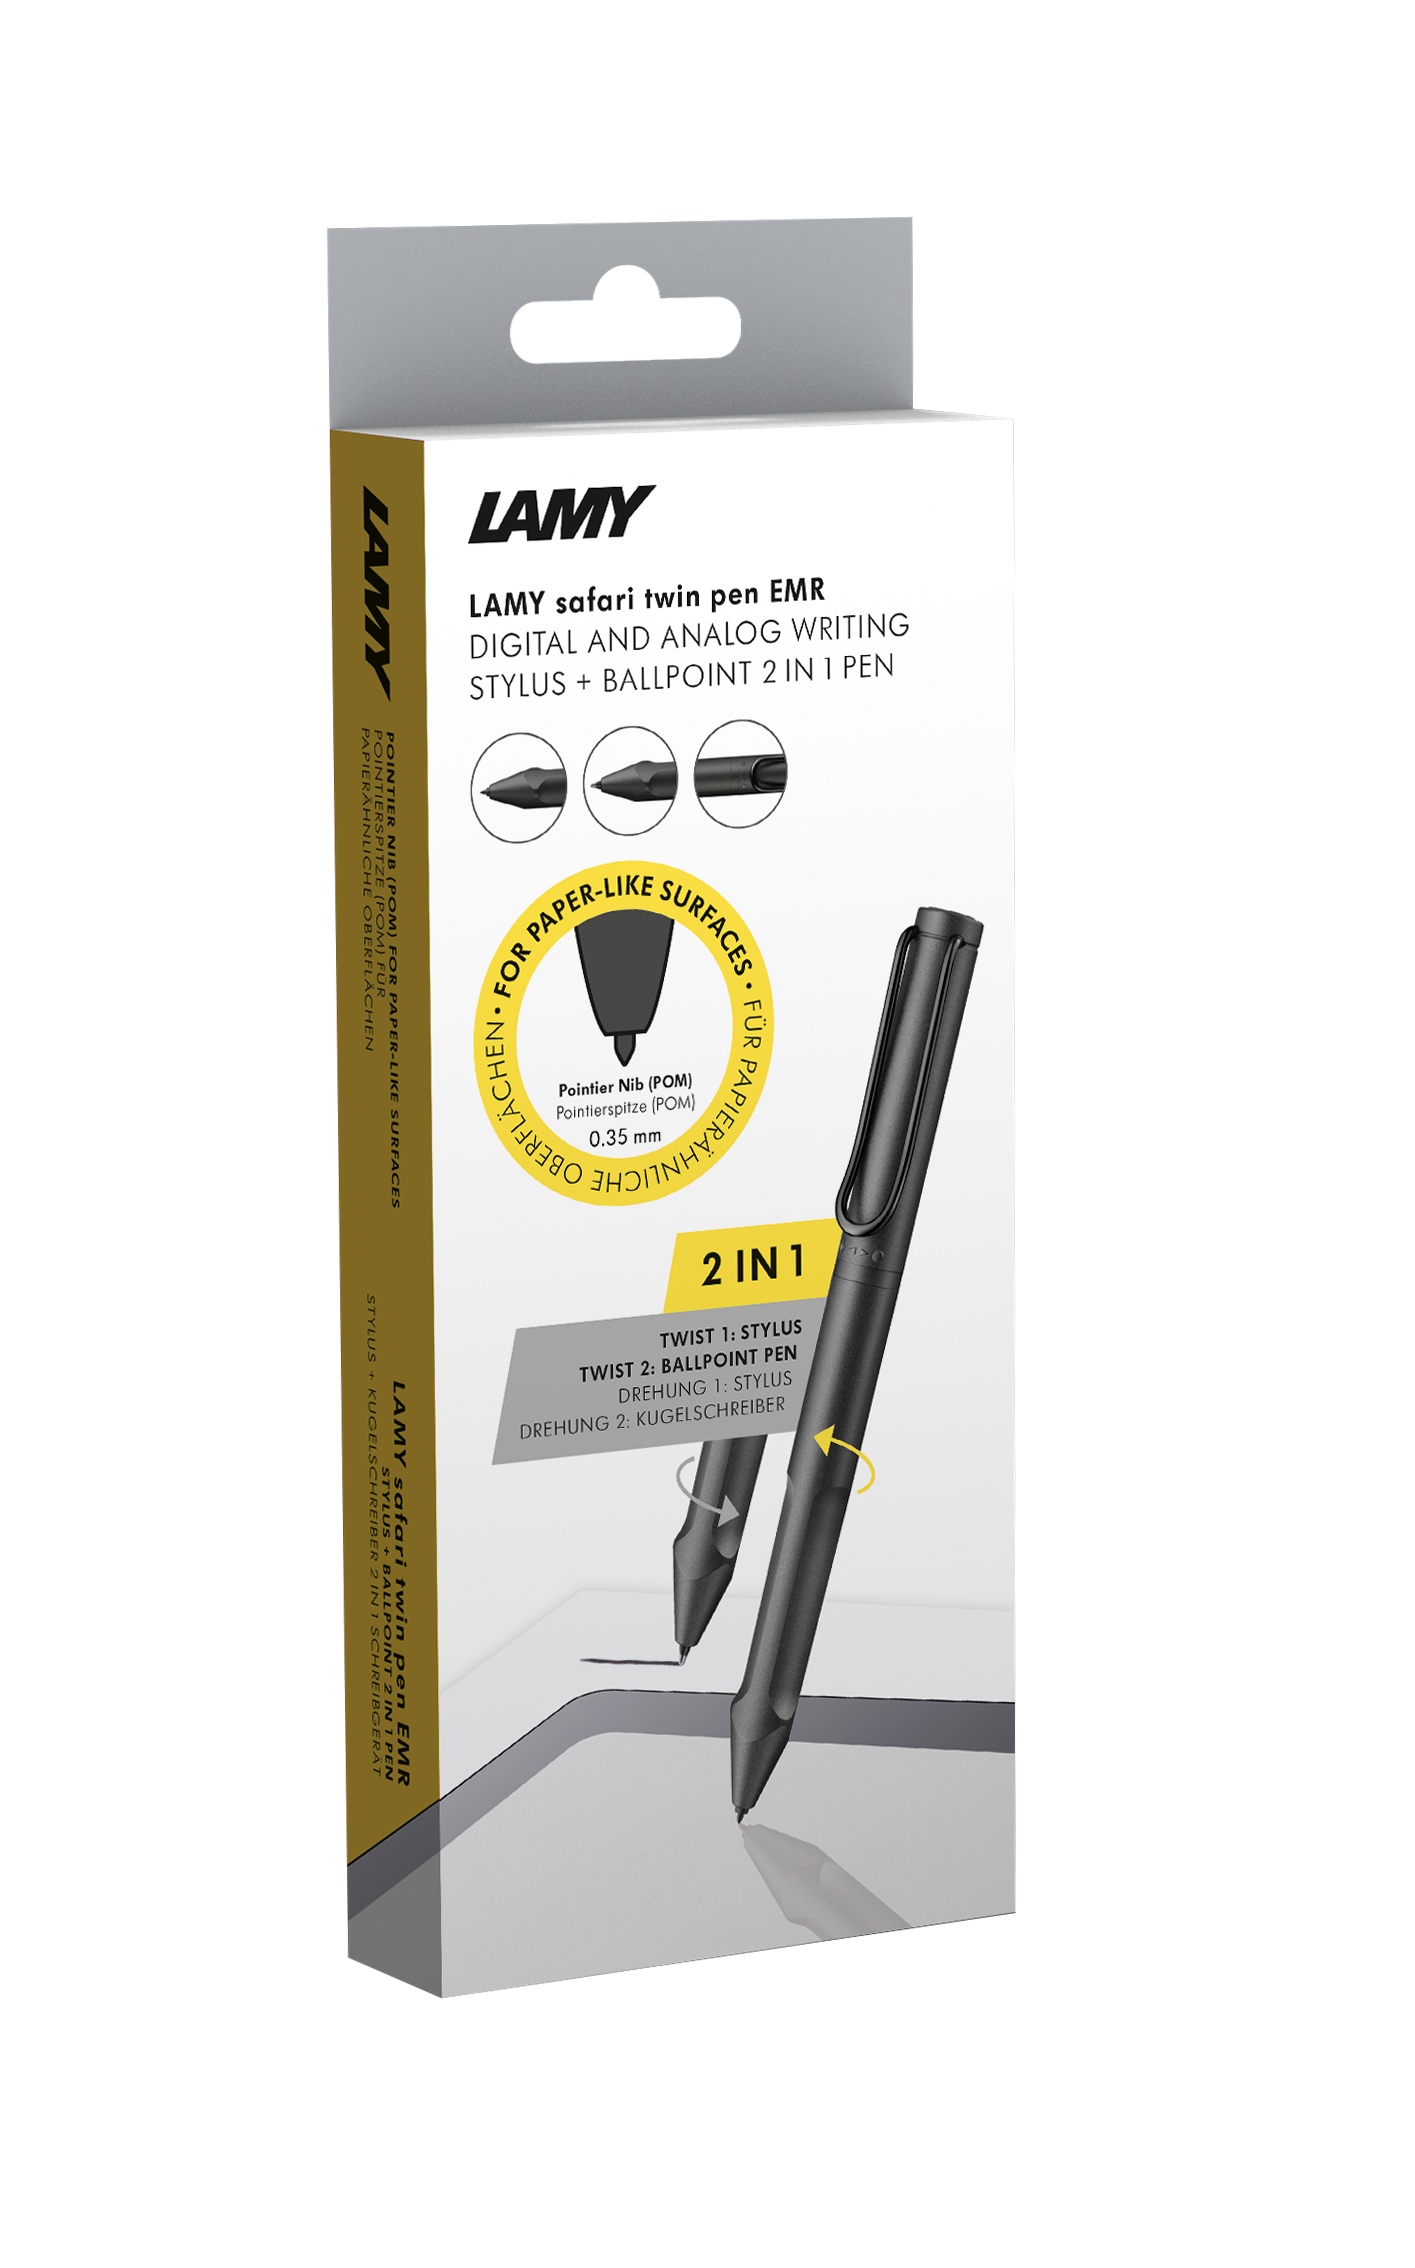 Lamy 644 safari twin pen all black EMR POM